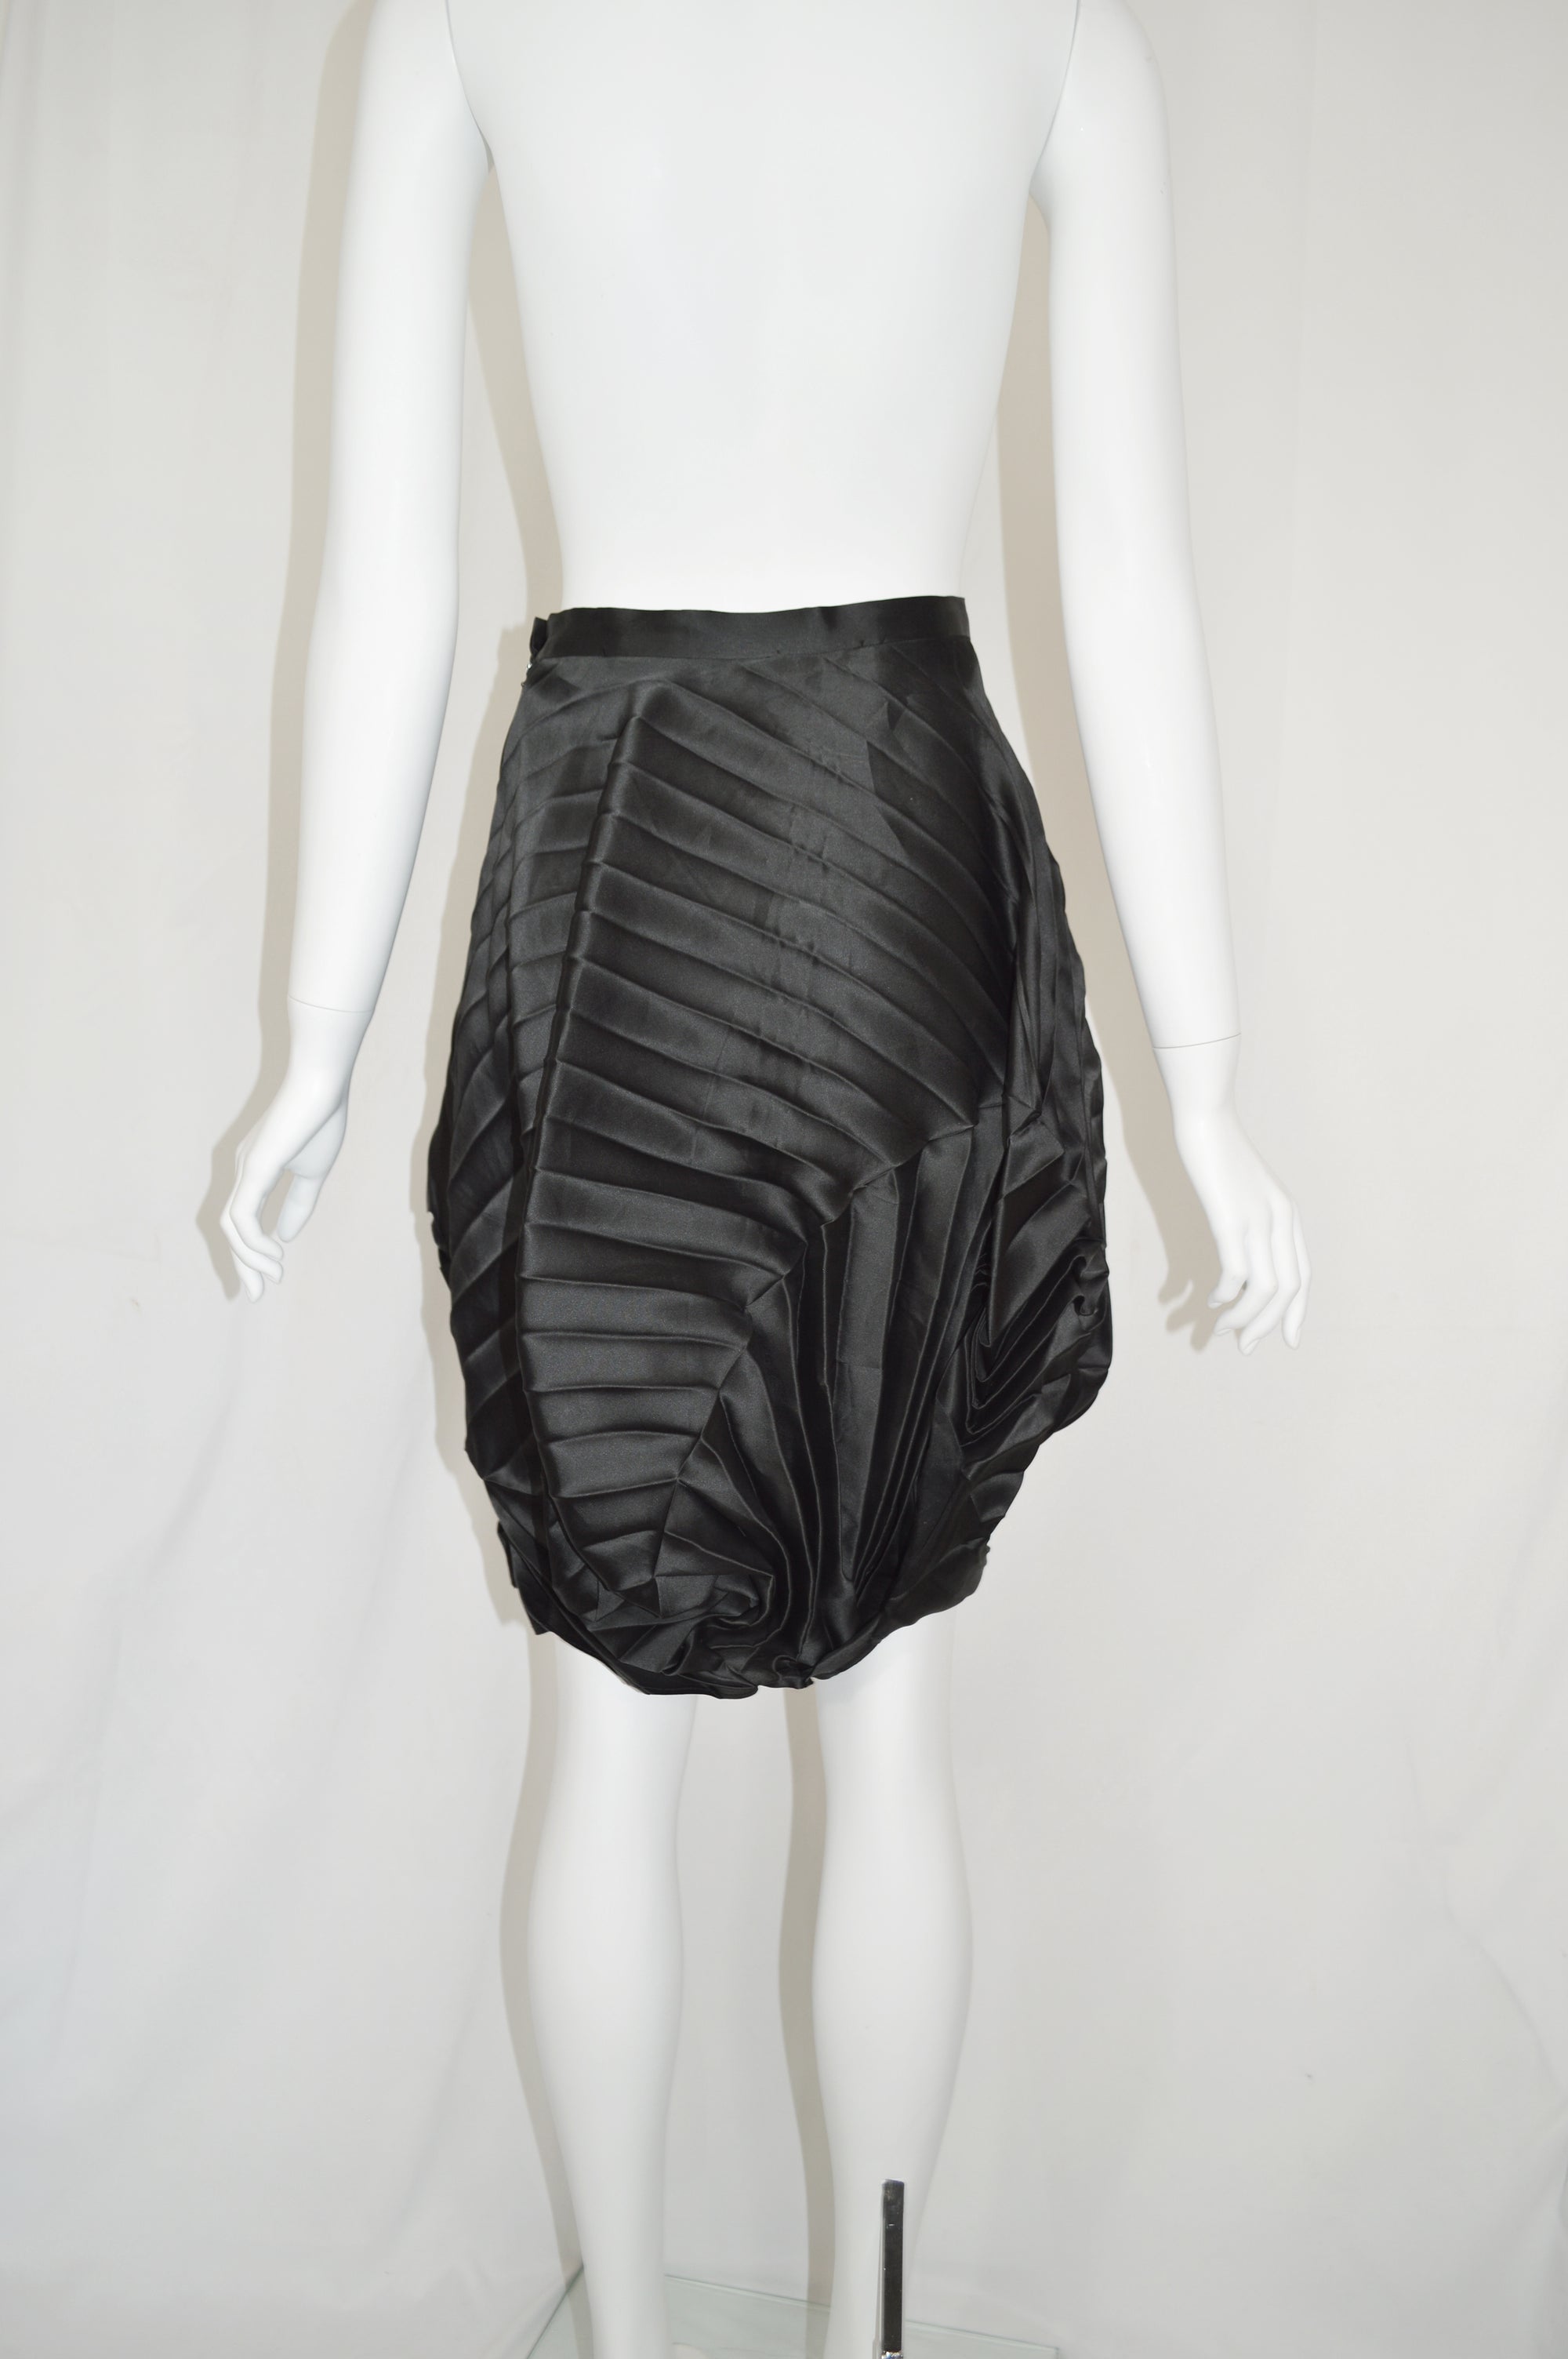 Pearce Fionda 1995 Sculptural Pleats Skirt